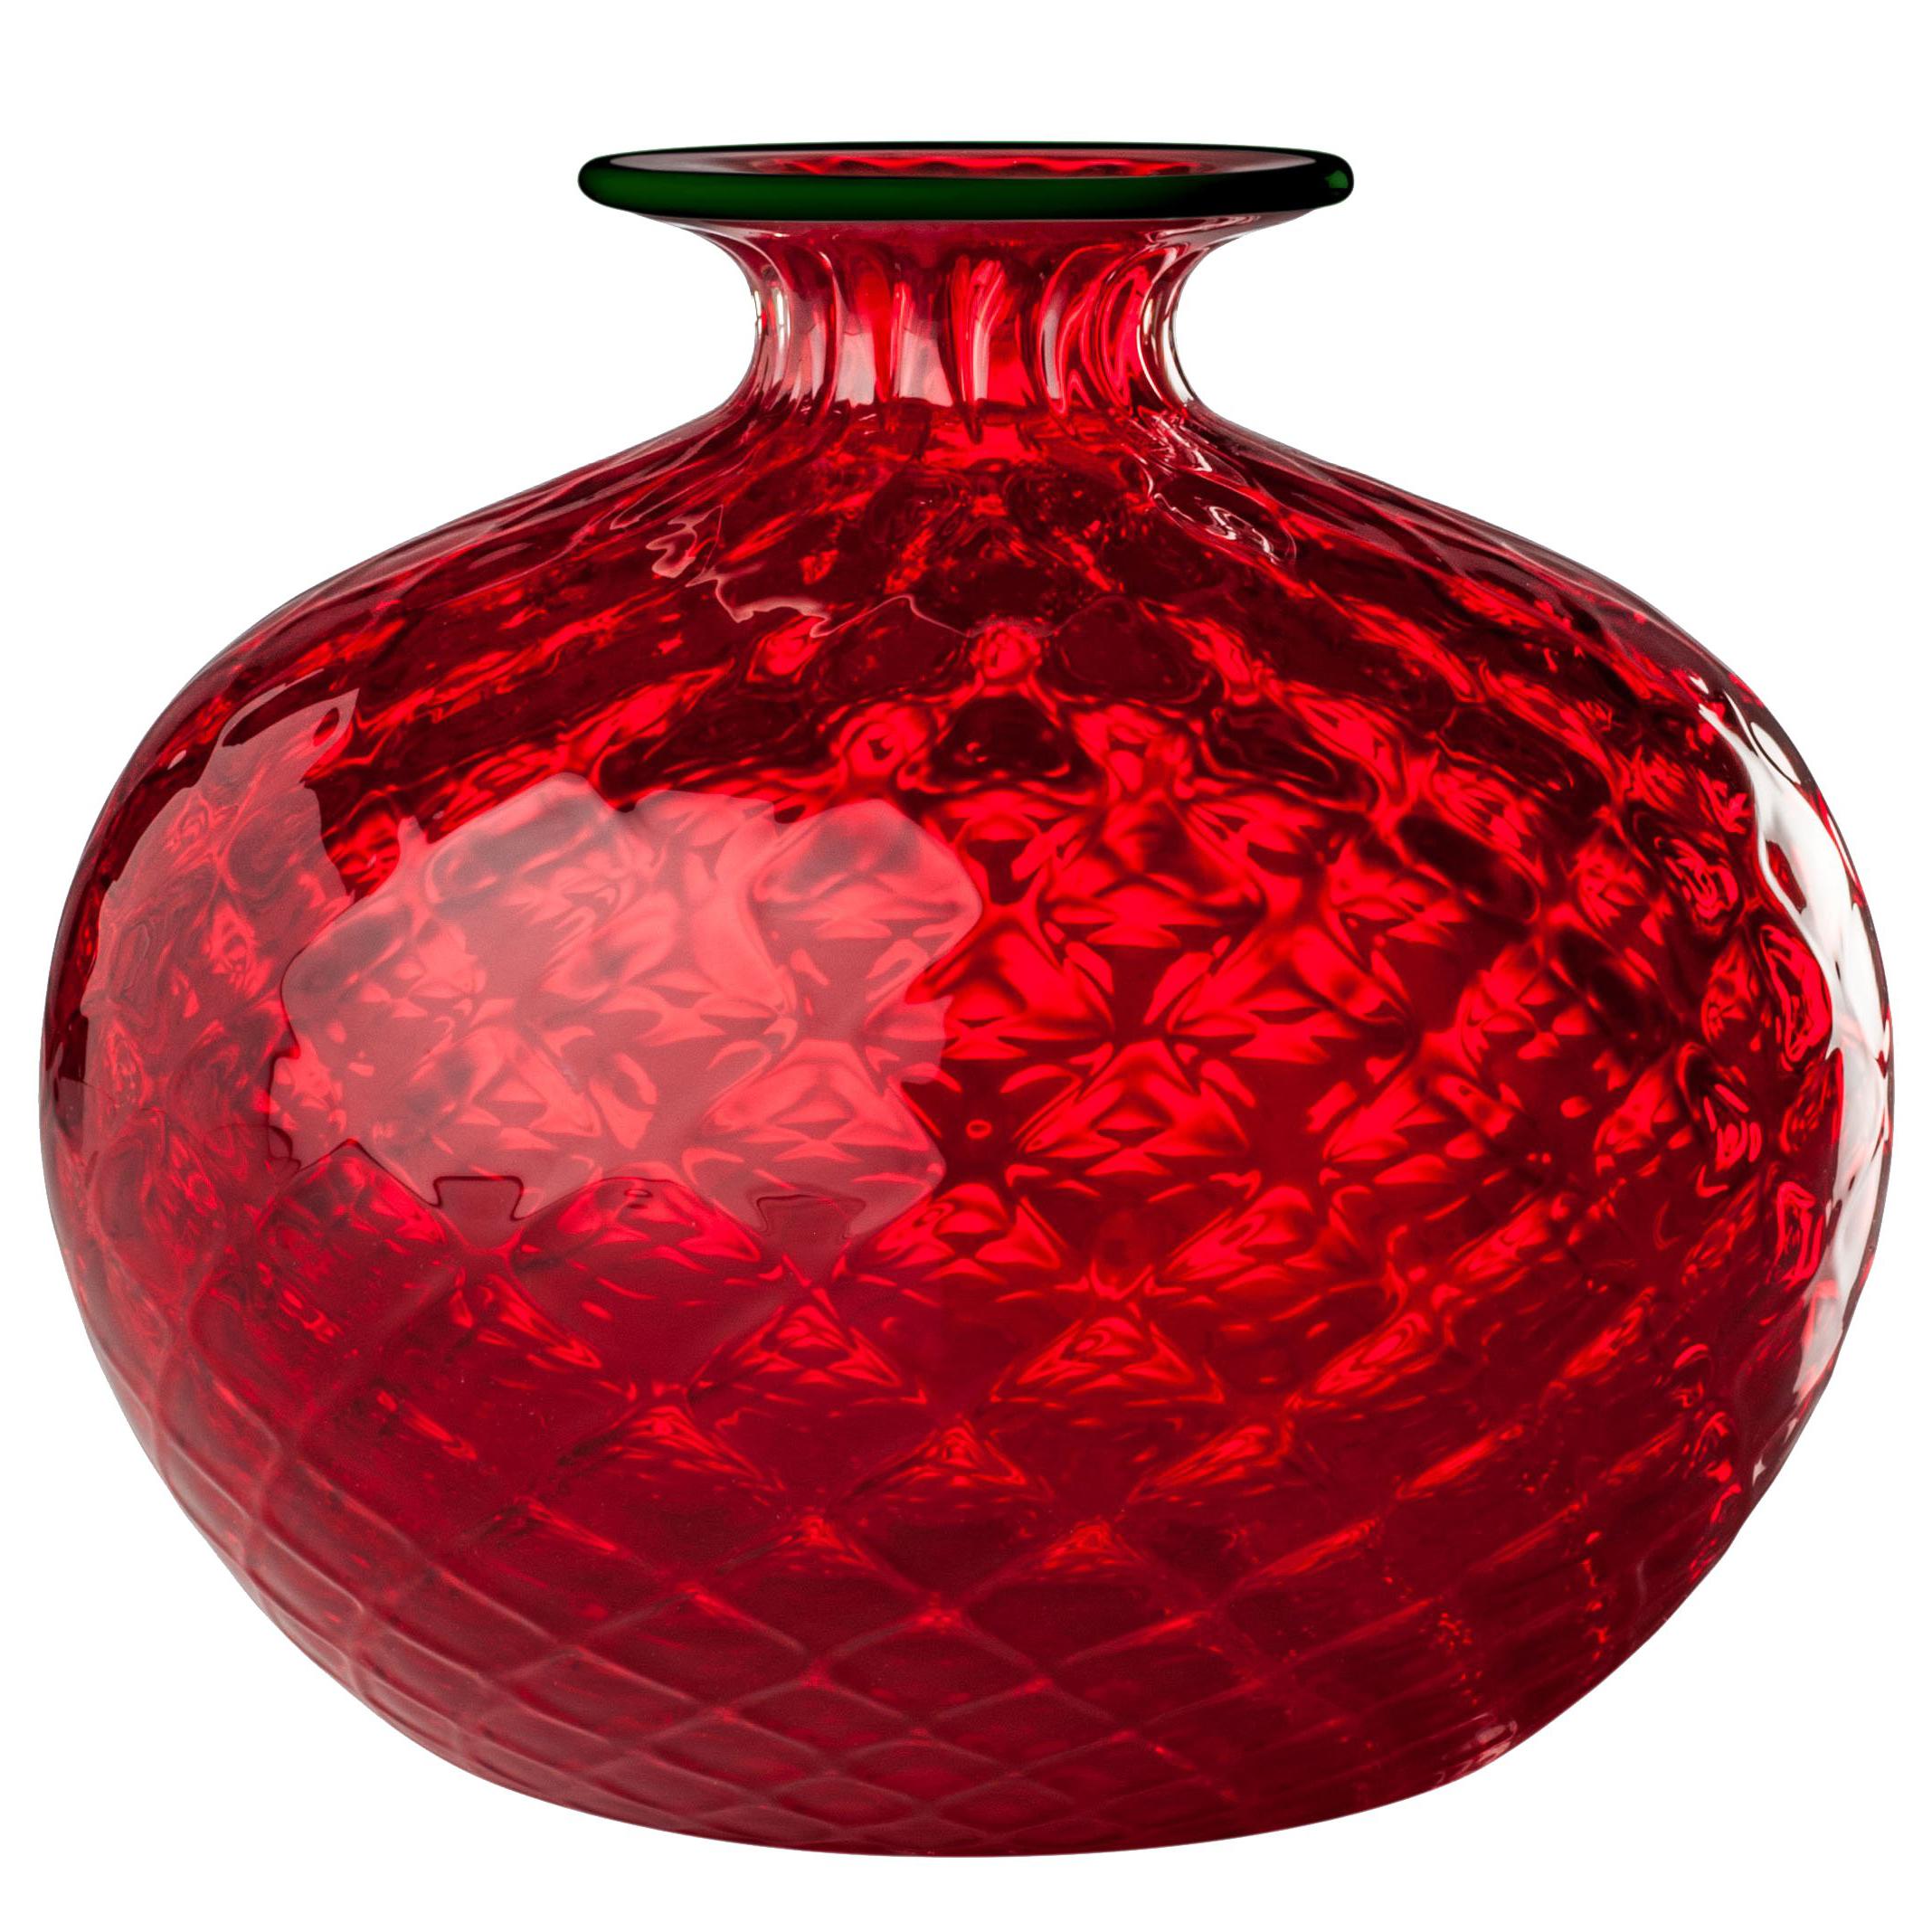 Monofiore Balaton Short Glass Vase in Red with Green Thread Rim by Venini